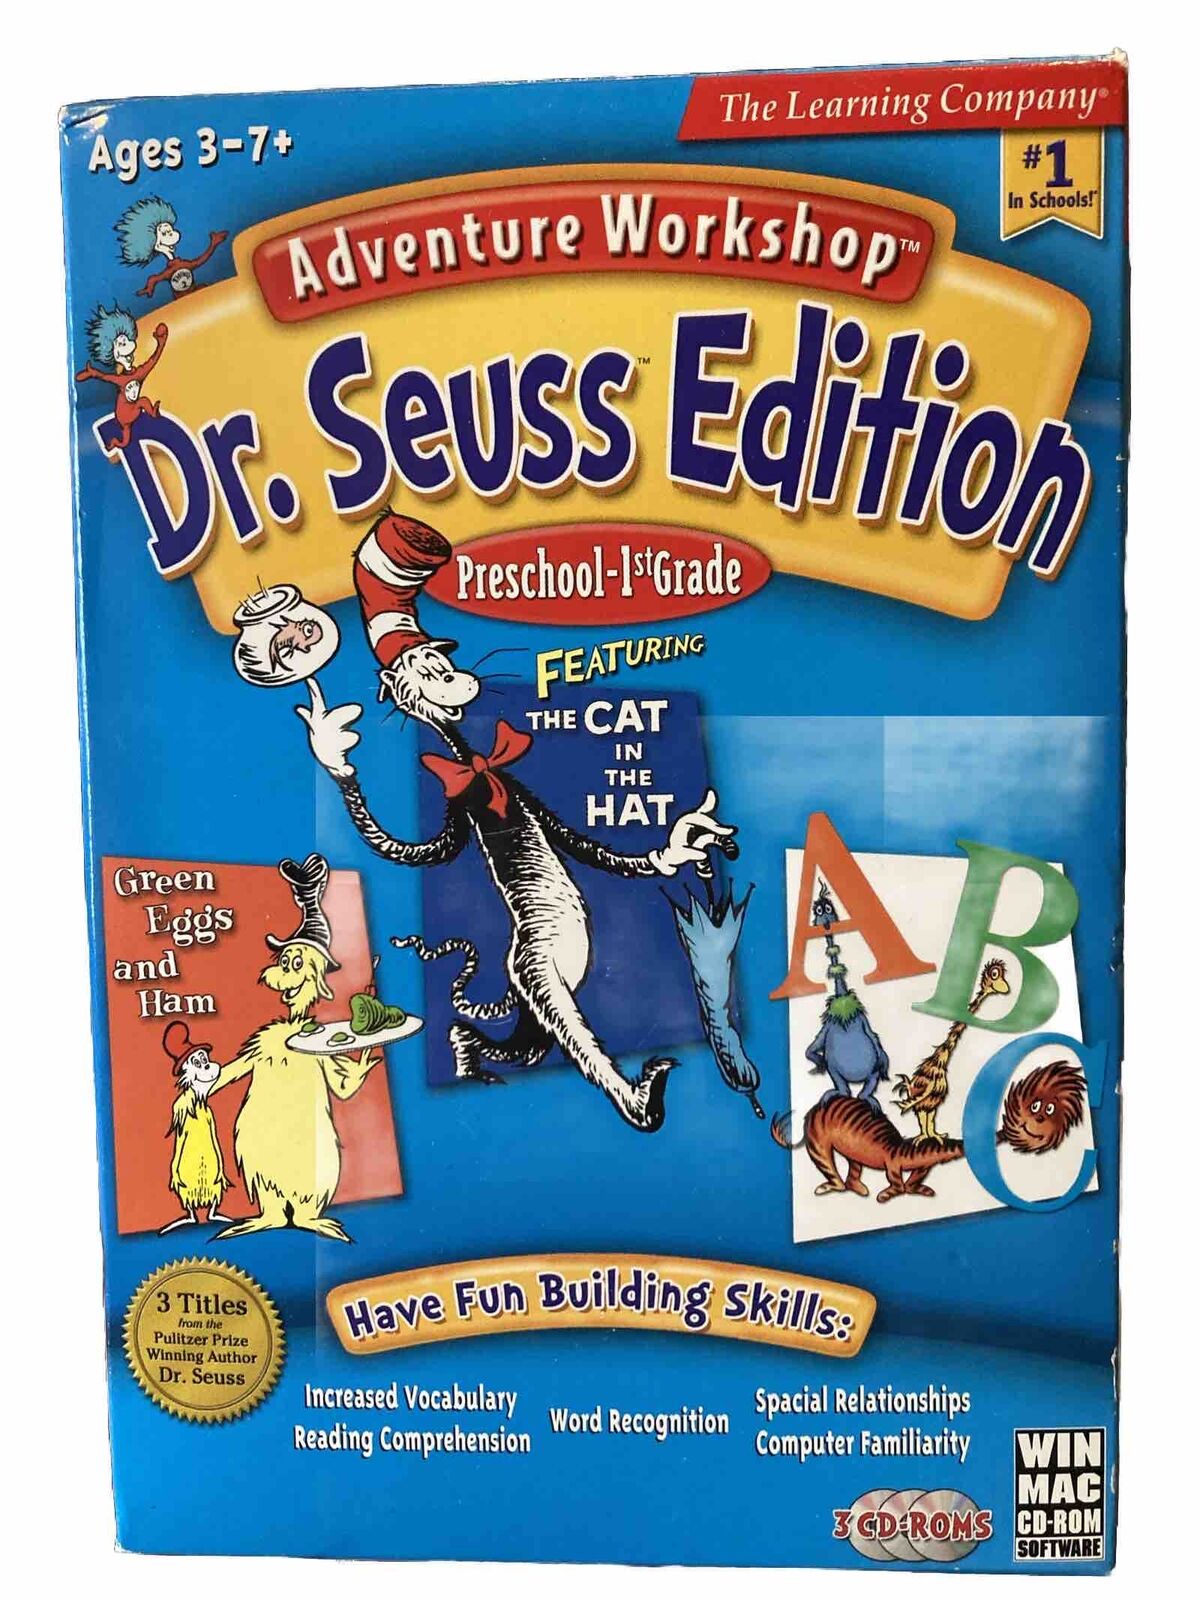 New Adventure Workshop Dr. Seuss Edition Preschool-1st Grade Ages 3-7  3 CD-ROMS